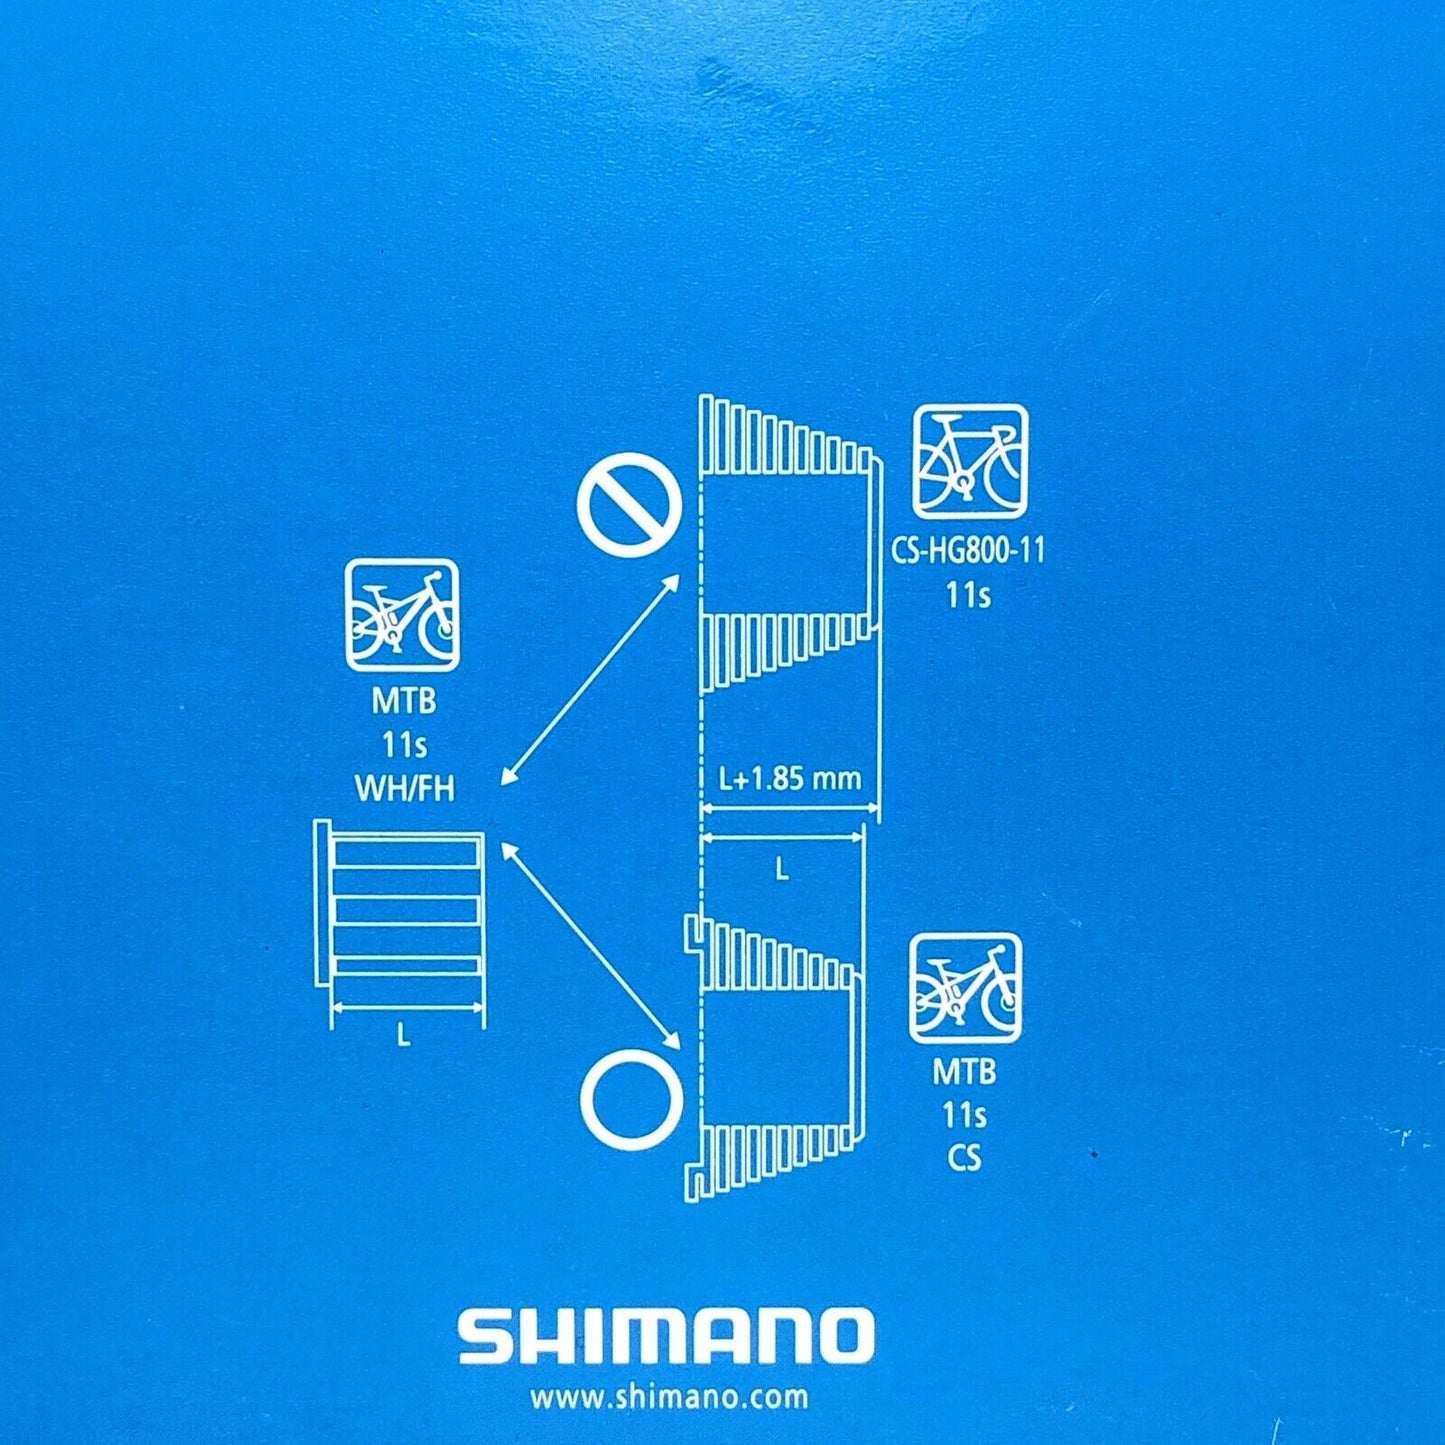 SHIMANO Ultegra CS-HG800 11-34 Cassette - 11 Speed Silver Bike Sprocket Cog Gear